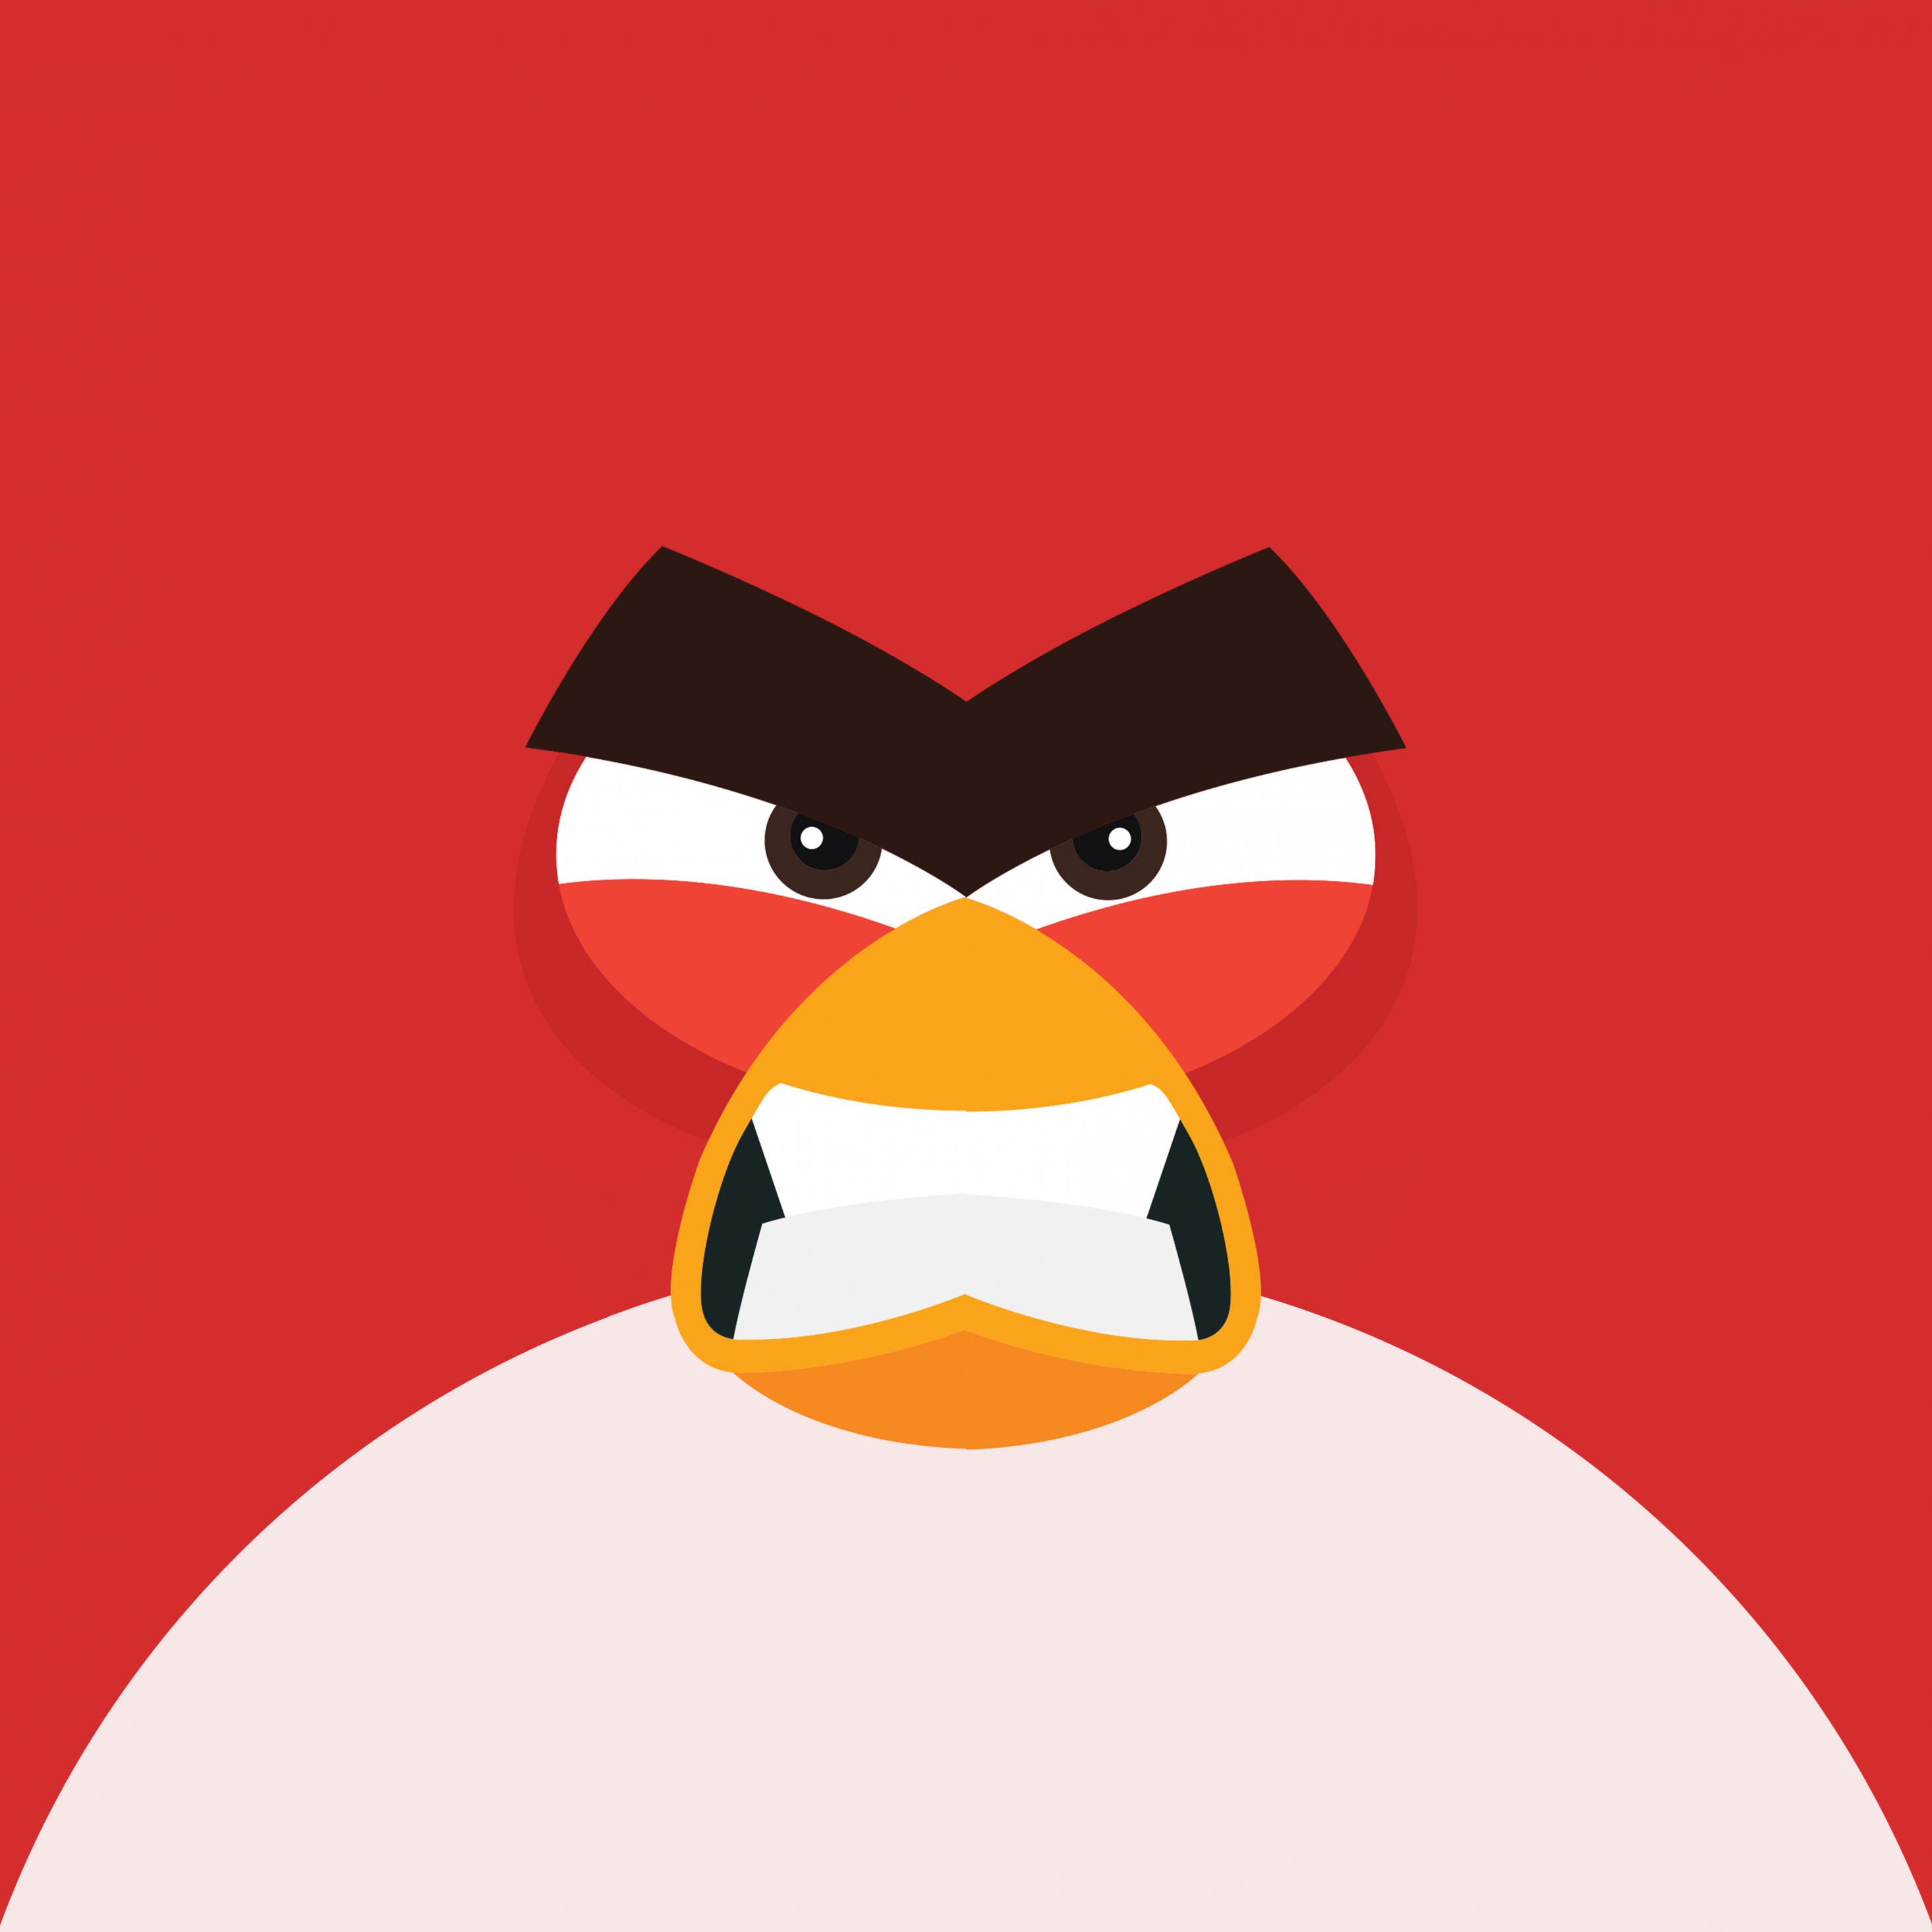 Download wallpaper 2932x2932 angry birds, red, minimal, ipad pro retina,  2932x2932 hd background, 27261